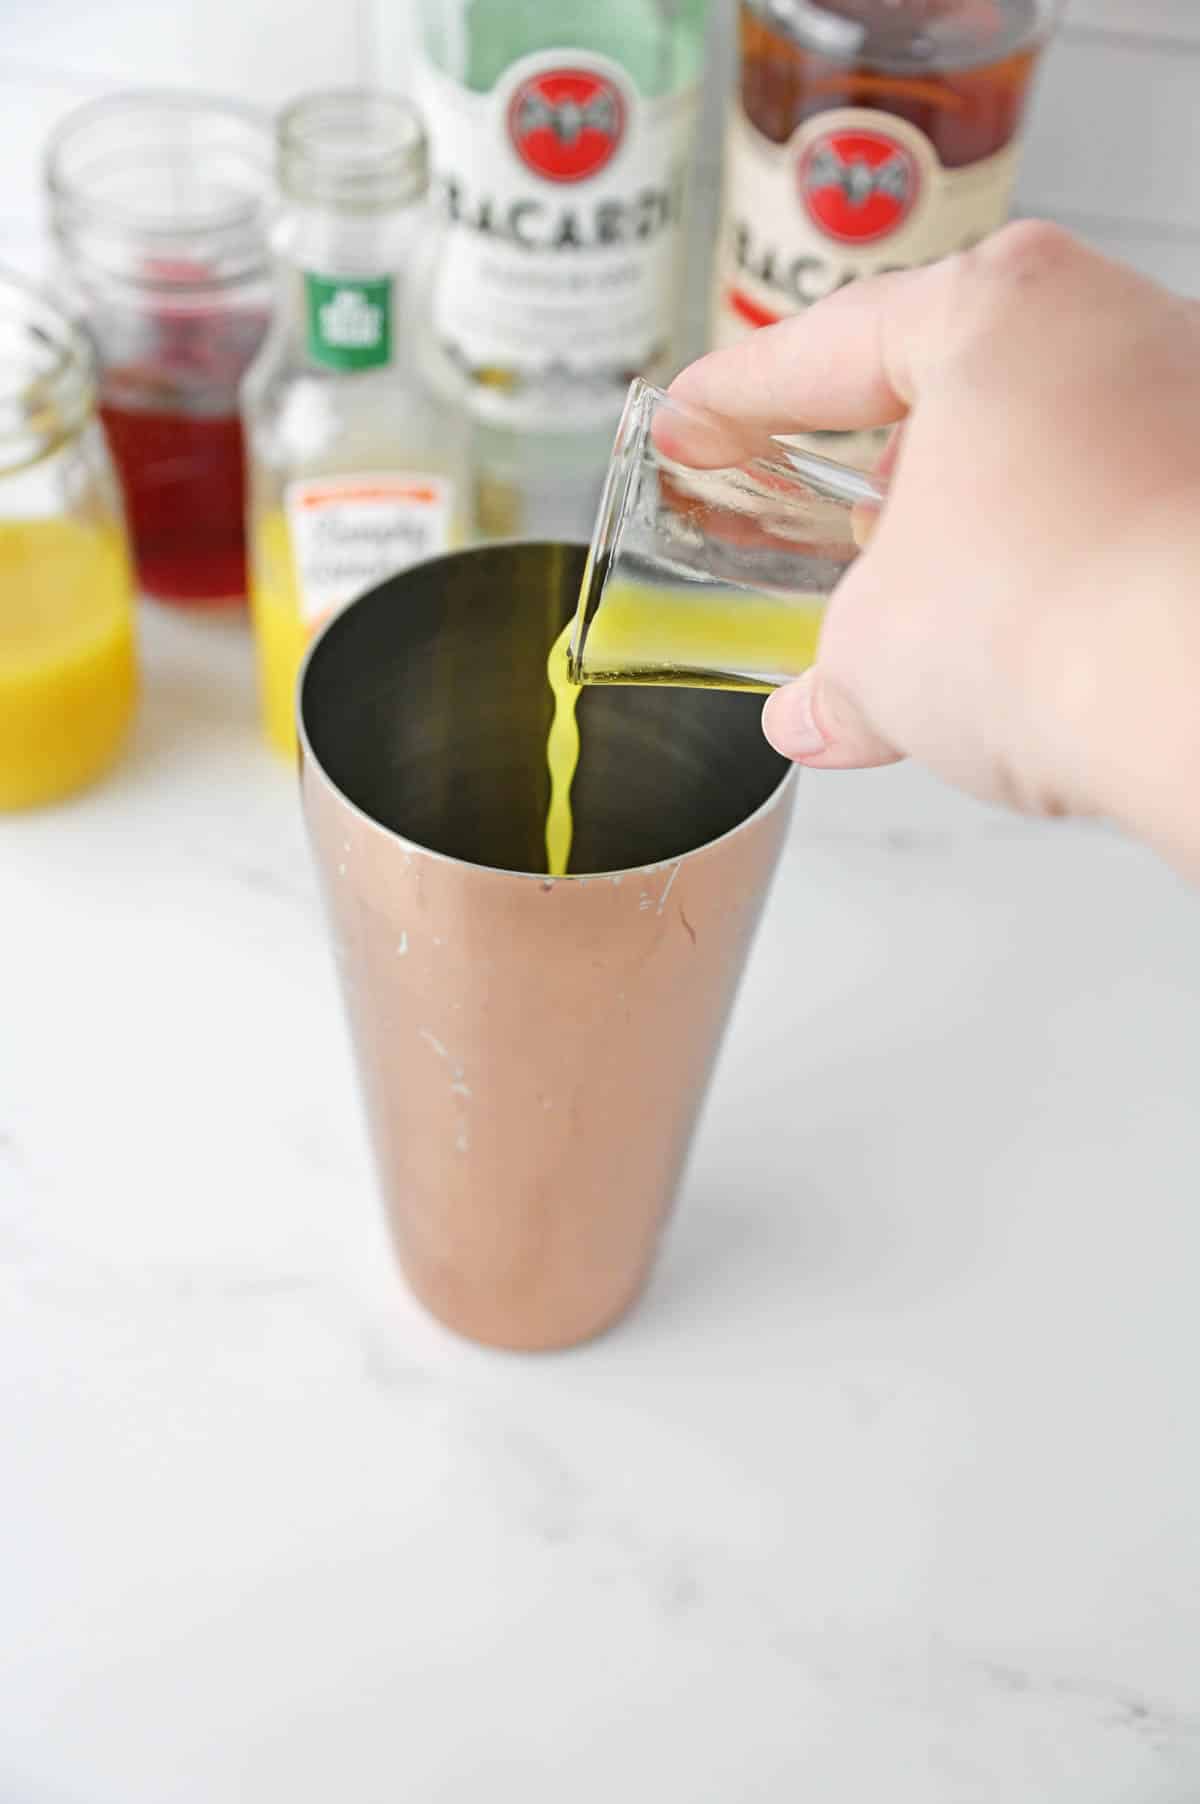 Pour juice into shaker cup.